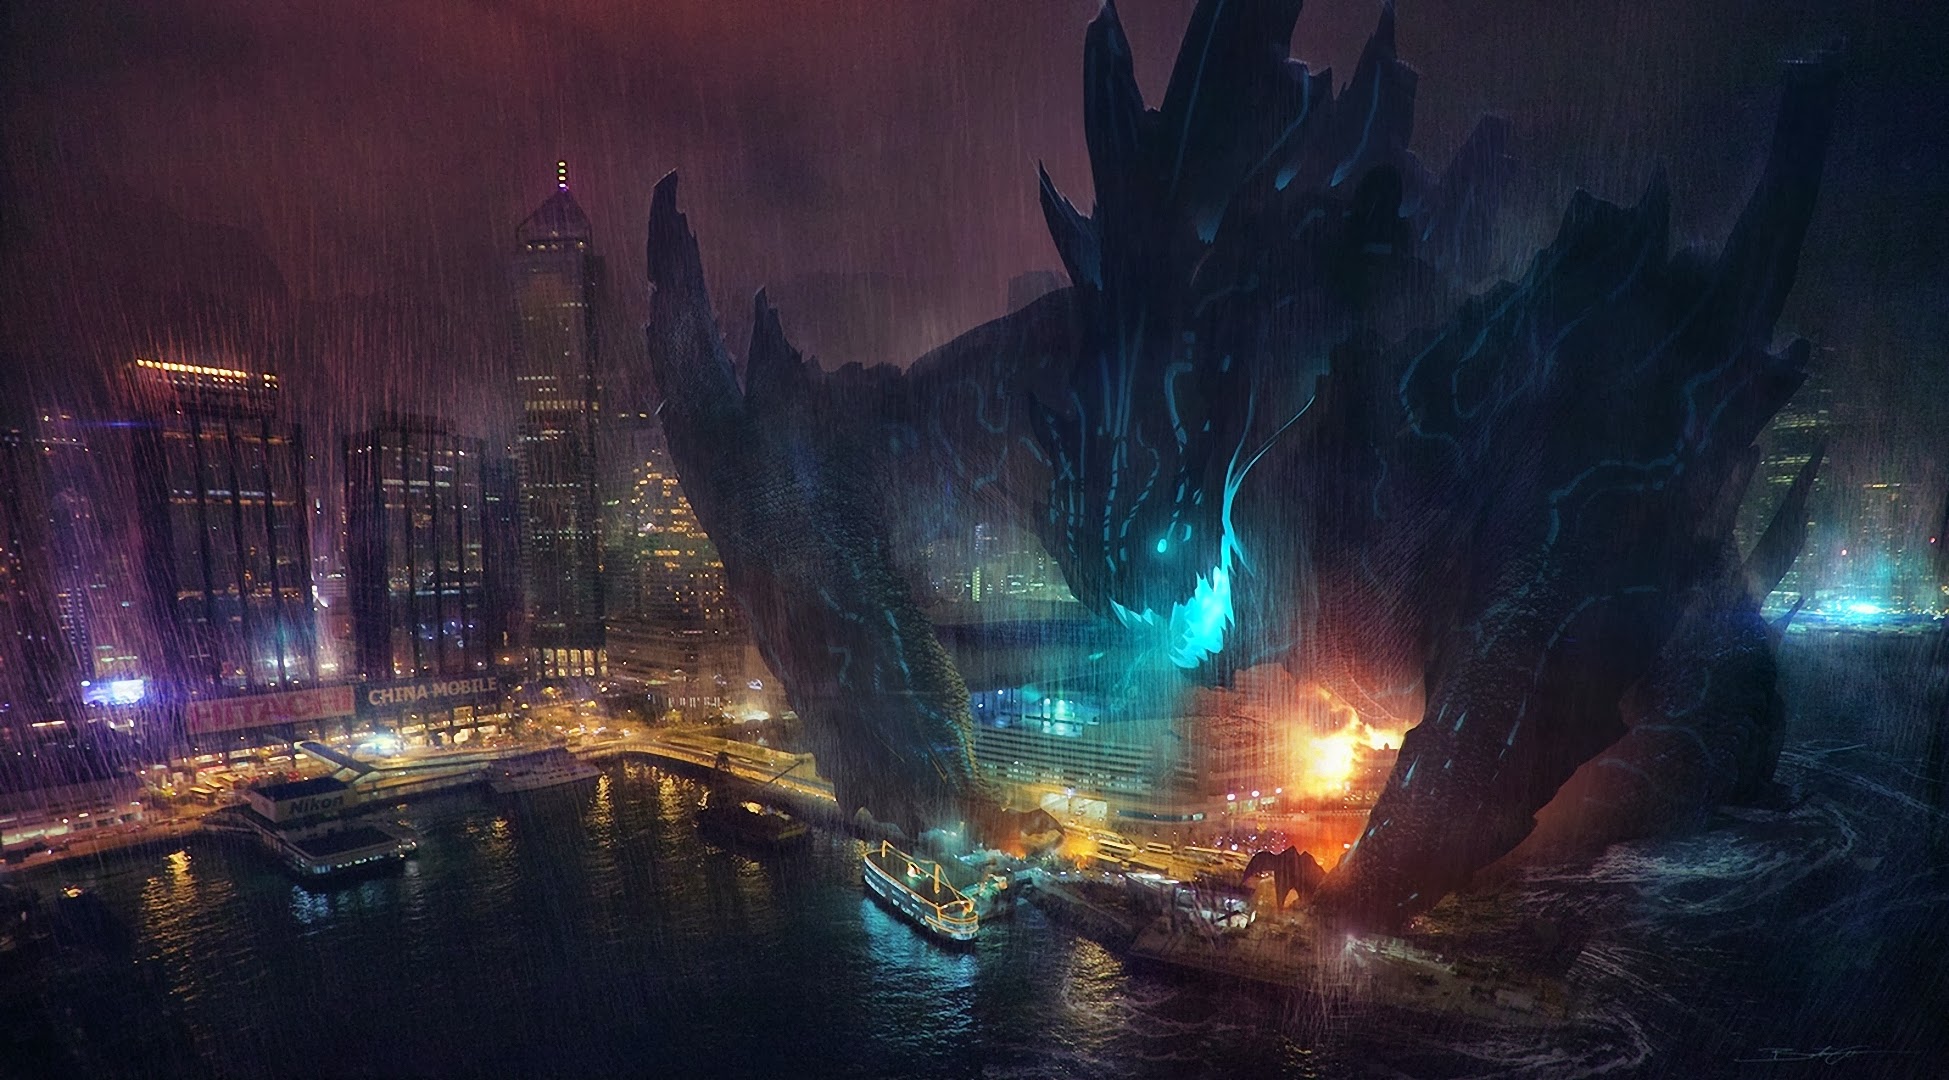 Pacific-Rim-Kaiju-monster-movie-city-coast-wallpaper404.com-hd.jpg